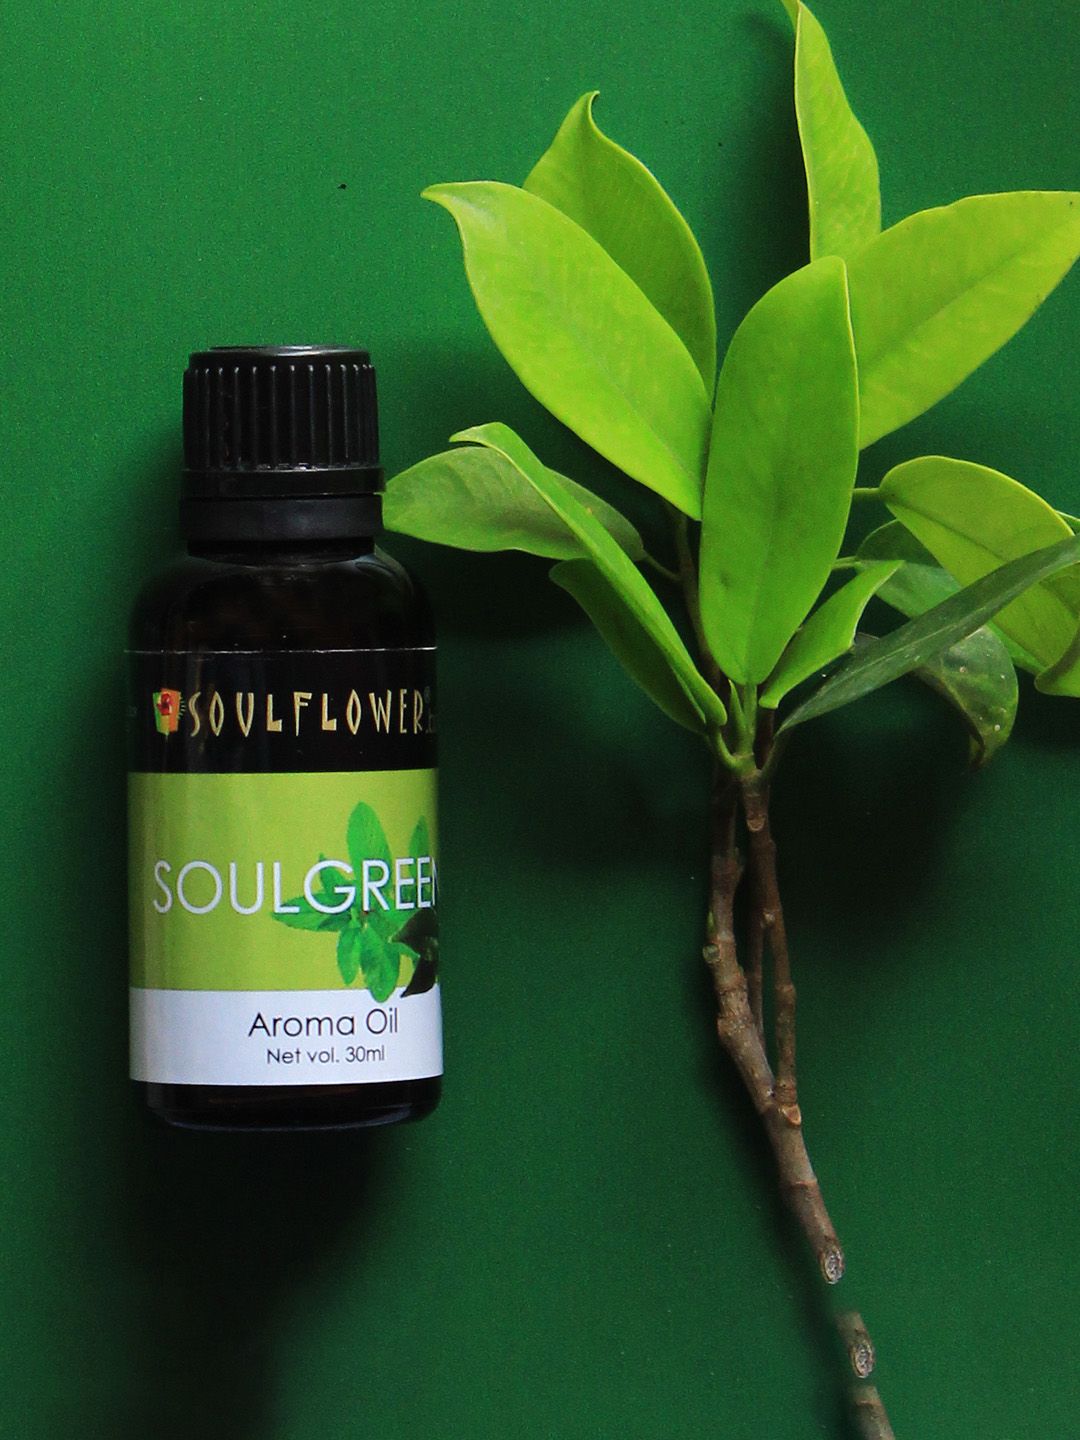 Soulflower Aroma Oil Soulgreen 30ml Price in India